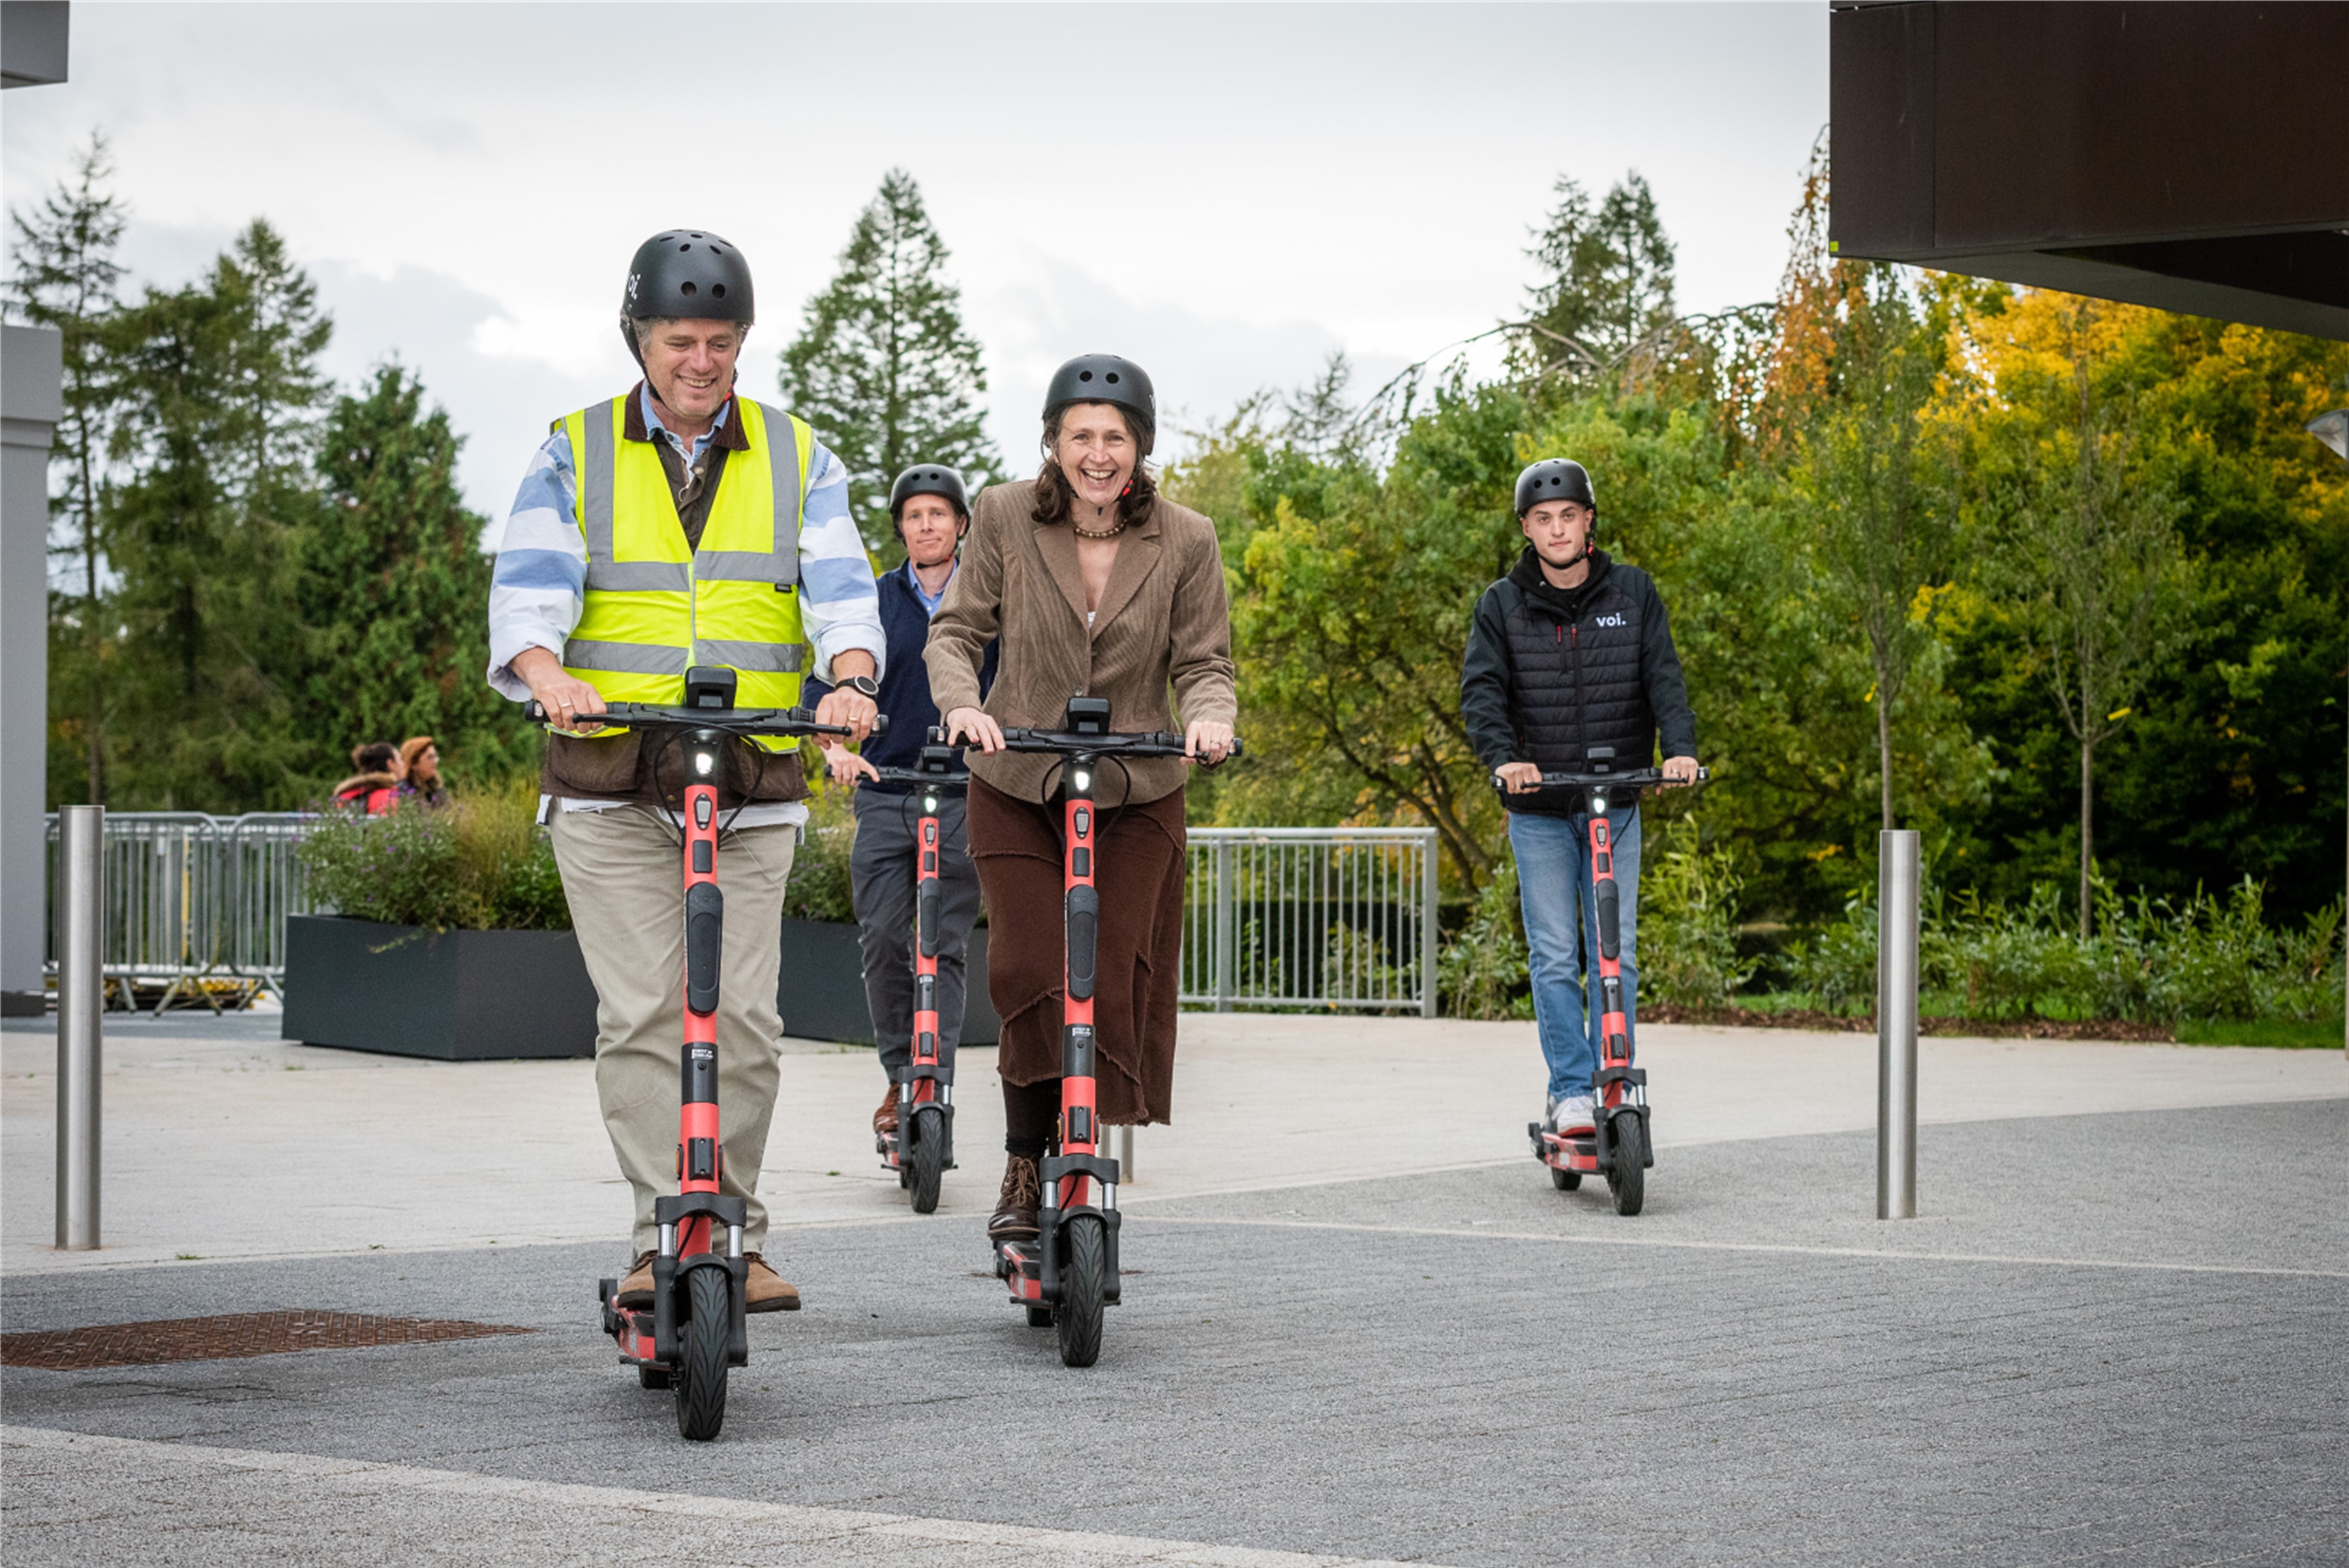 Councillor Matt McCabe, Ian Blenkharn, Councillor Sarah Warren and Alfie Marsh riding the e-scooters at the University of Bath’s Claverton Down campus